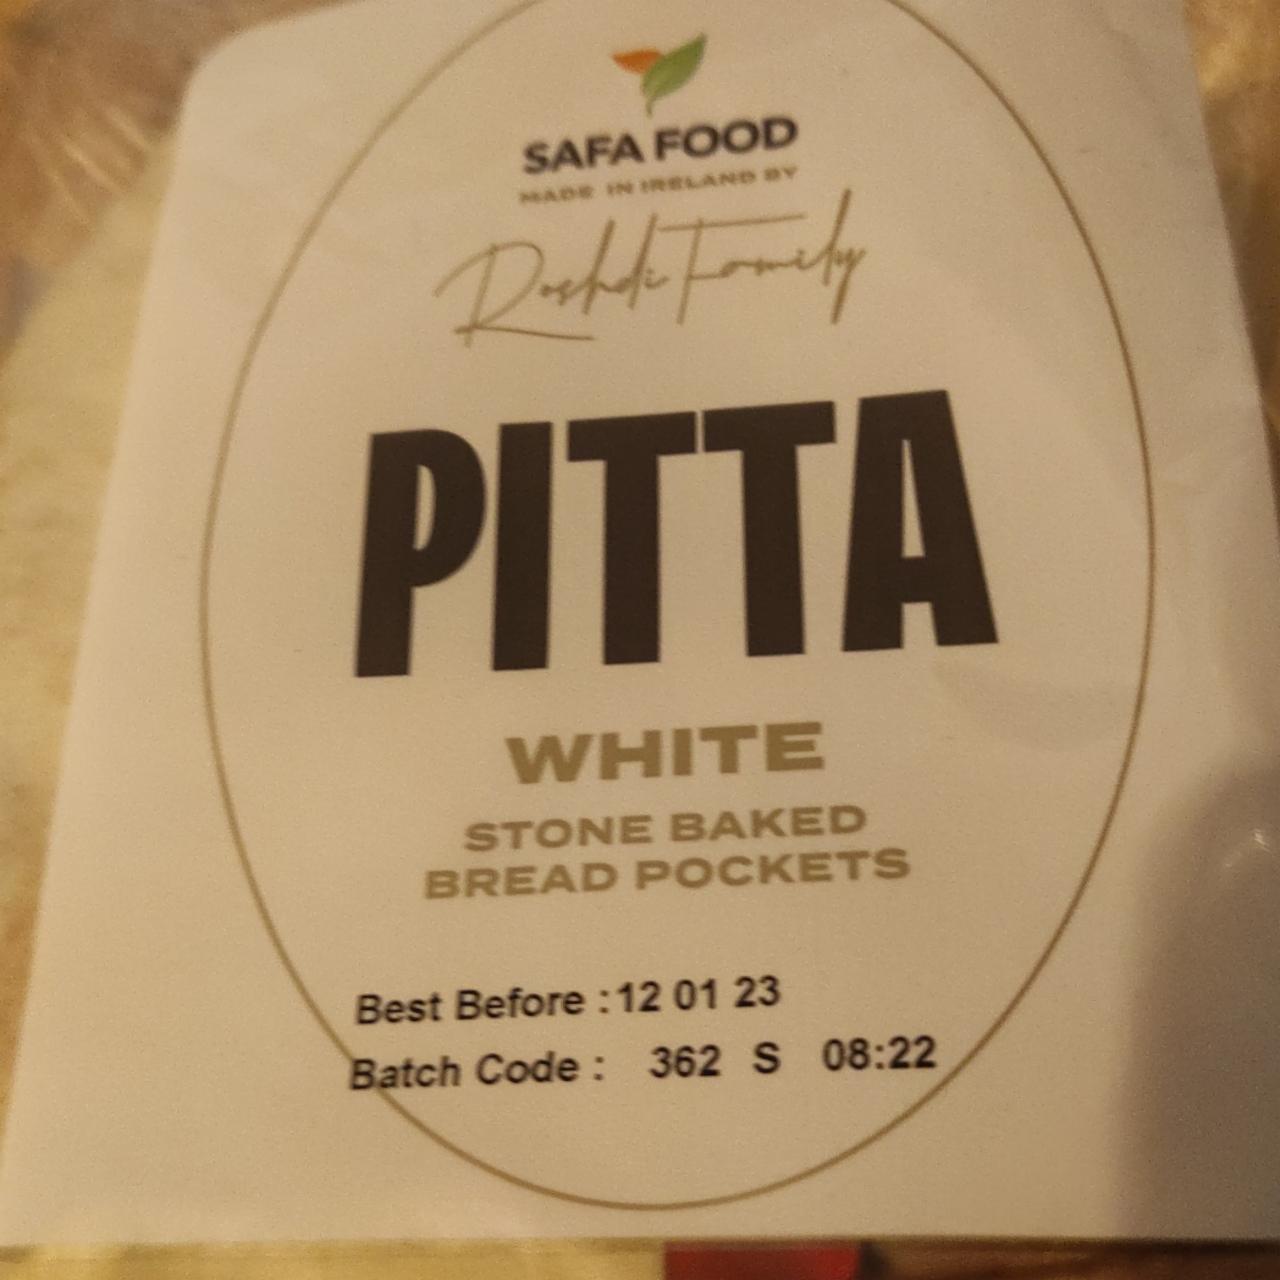 Fotografie - Pitta White Stone Baked Bread Pockets Safa Food